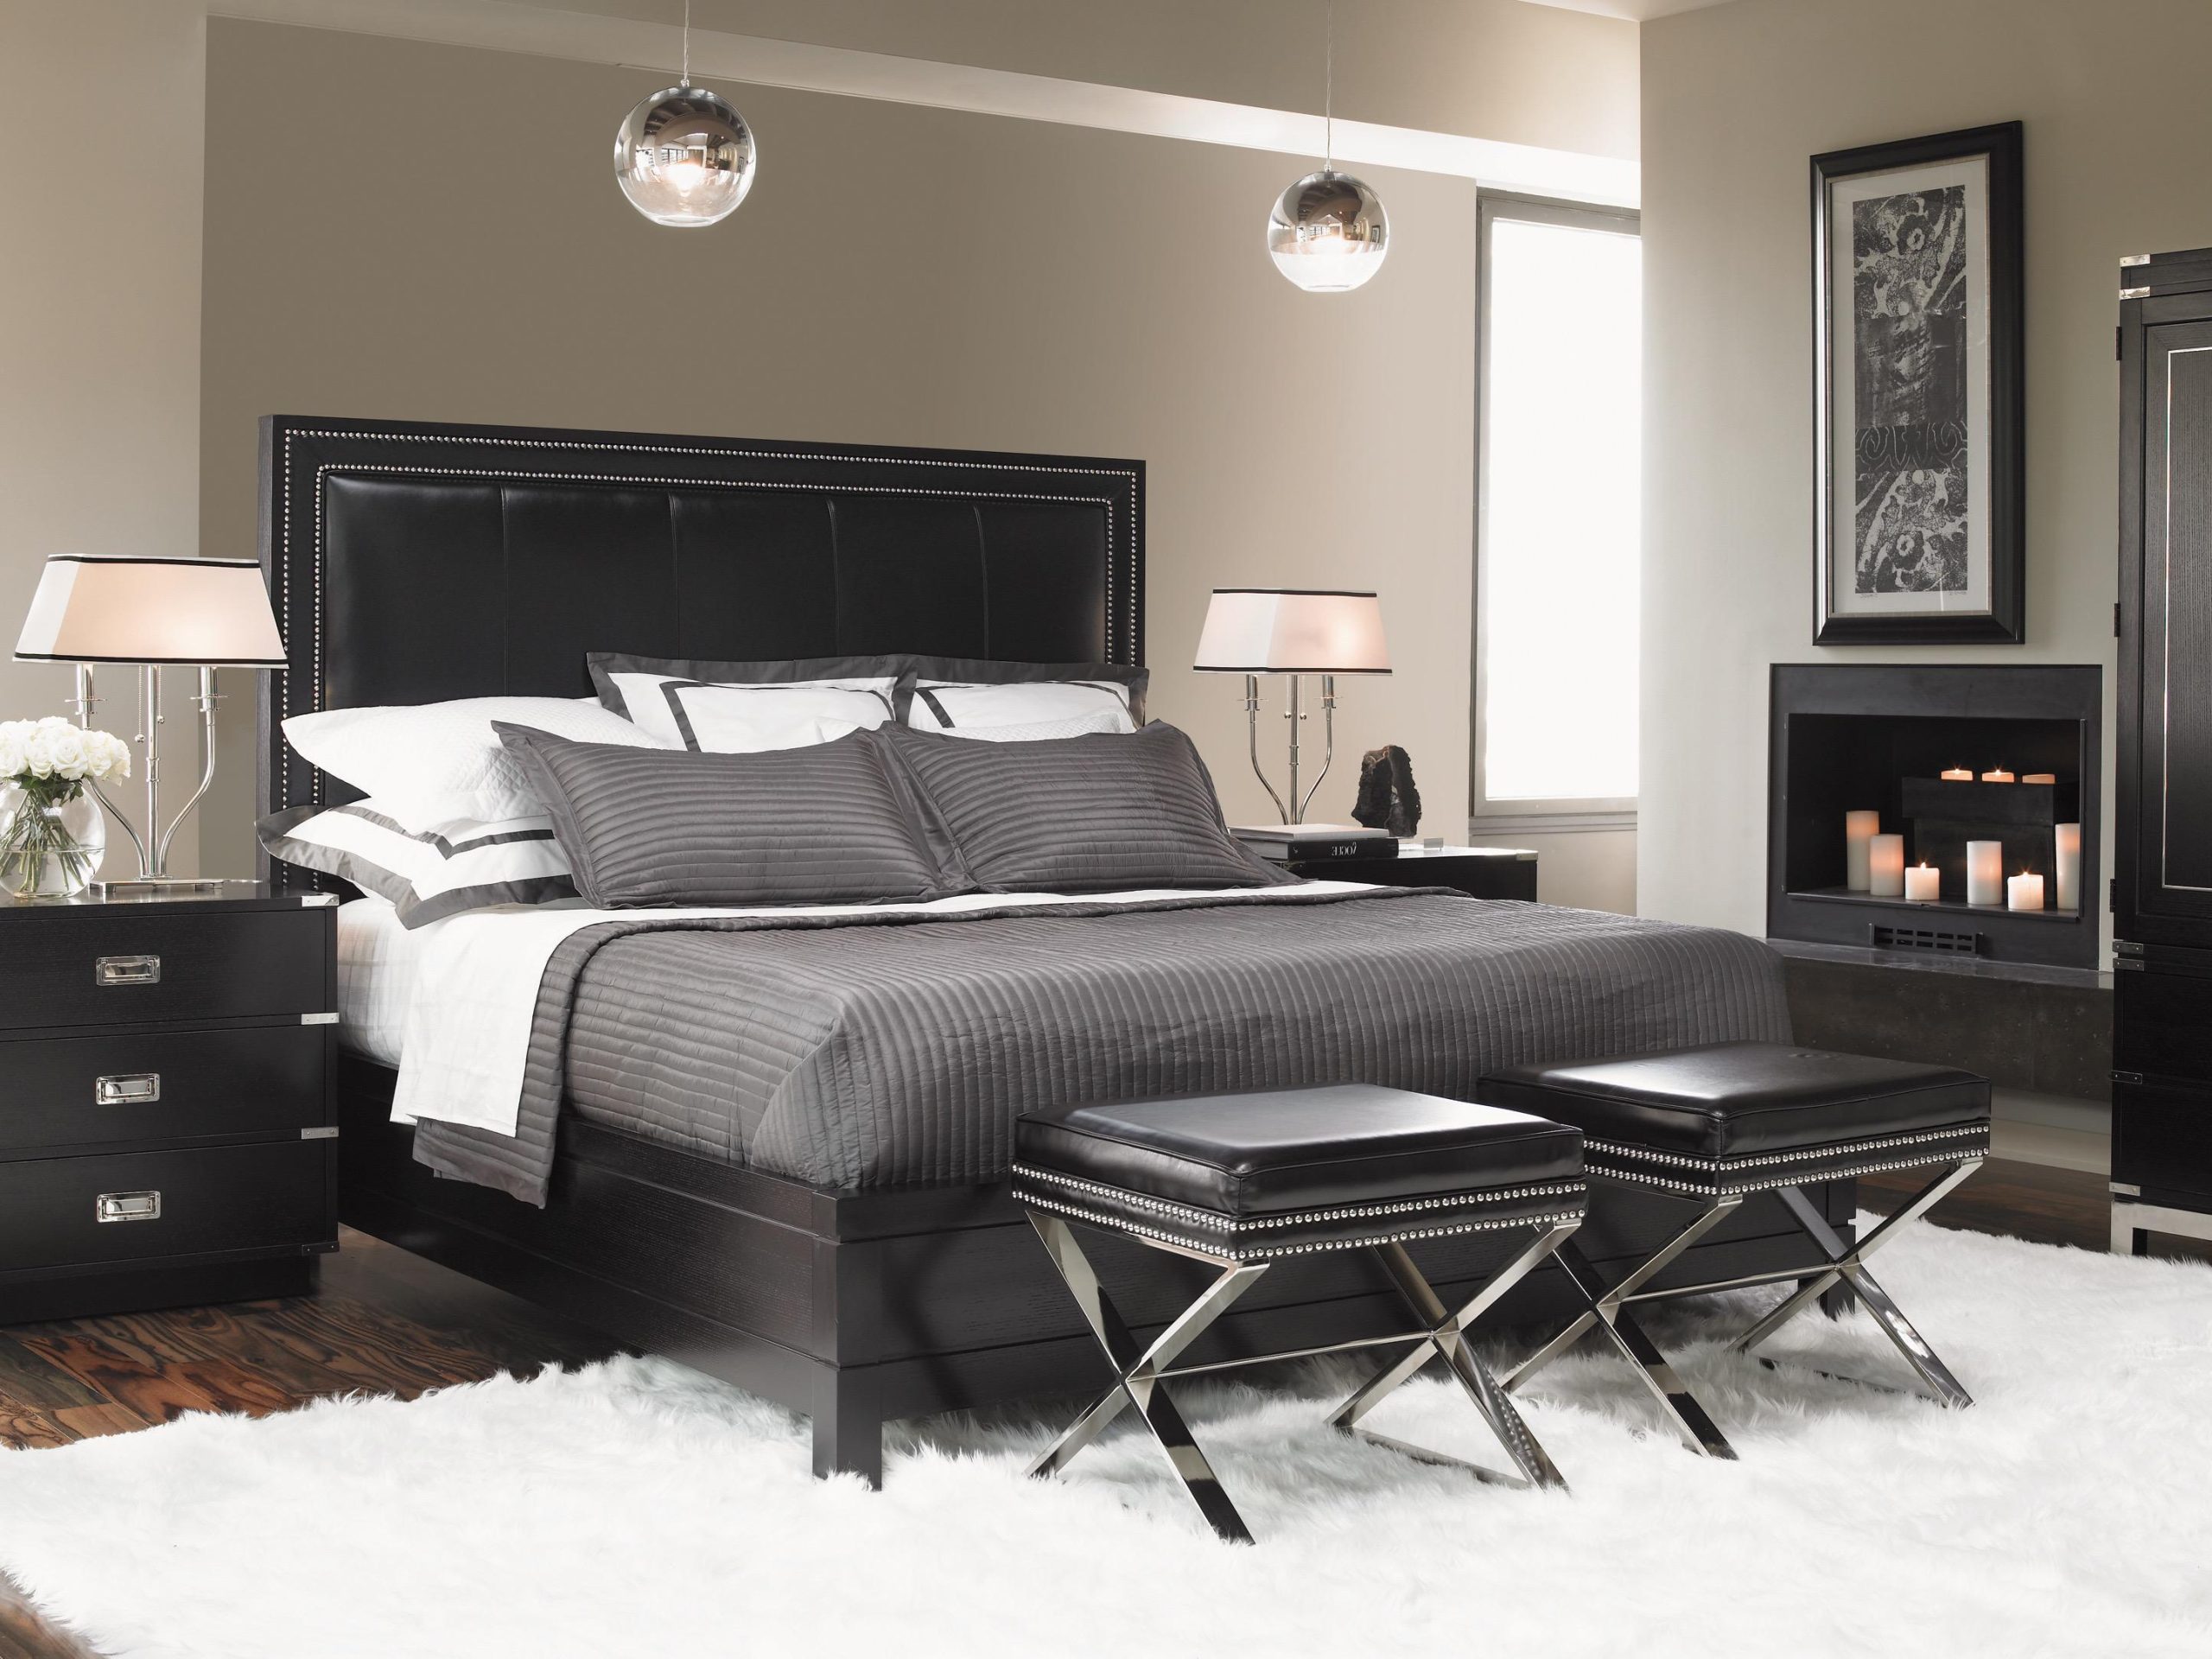 Black White And Gray Bedroom Decor